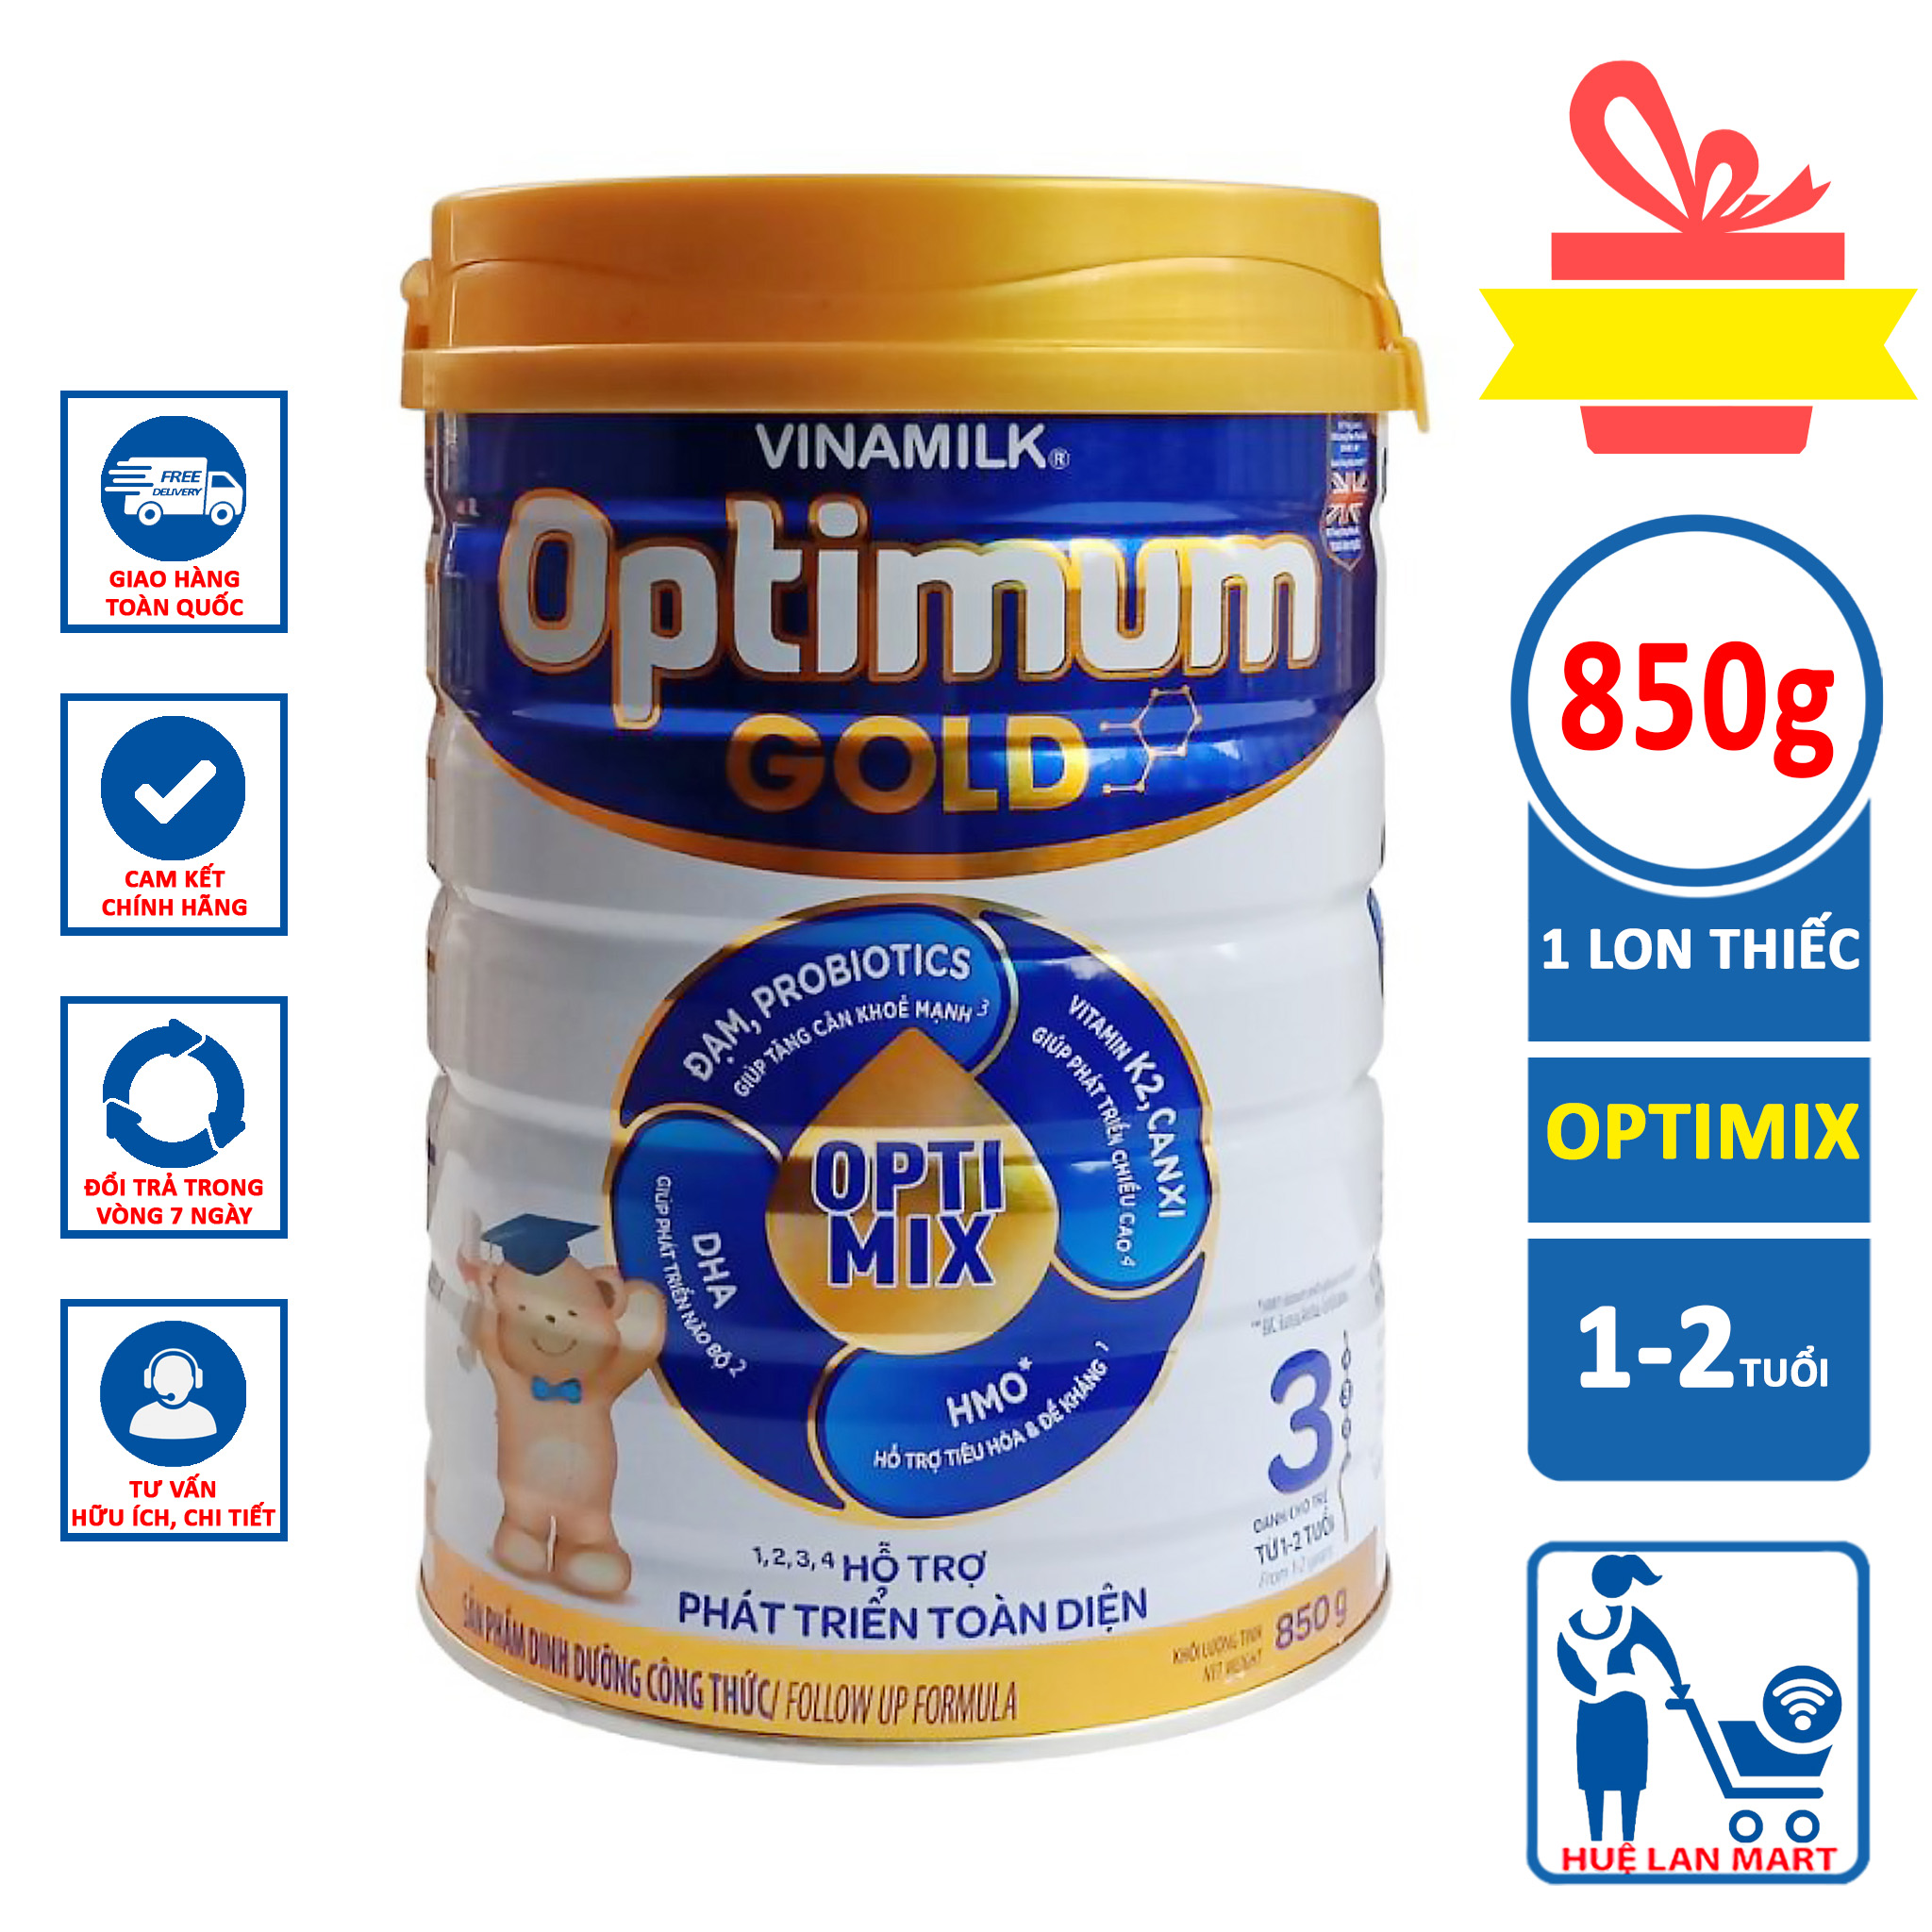 Sữa Bột Vinamilk Optimum Gold Optimix 3 - Hộp 850g Cho trẻ 1 2 tuổi